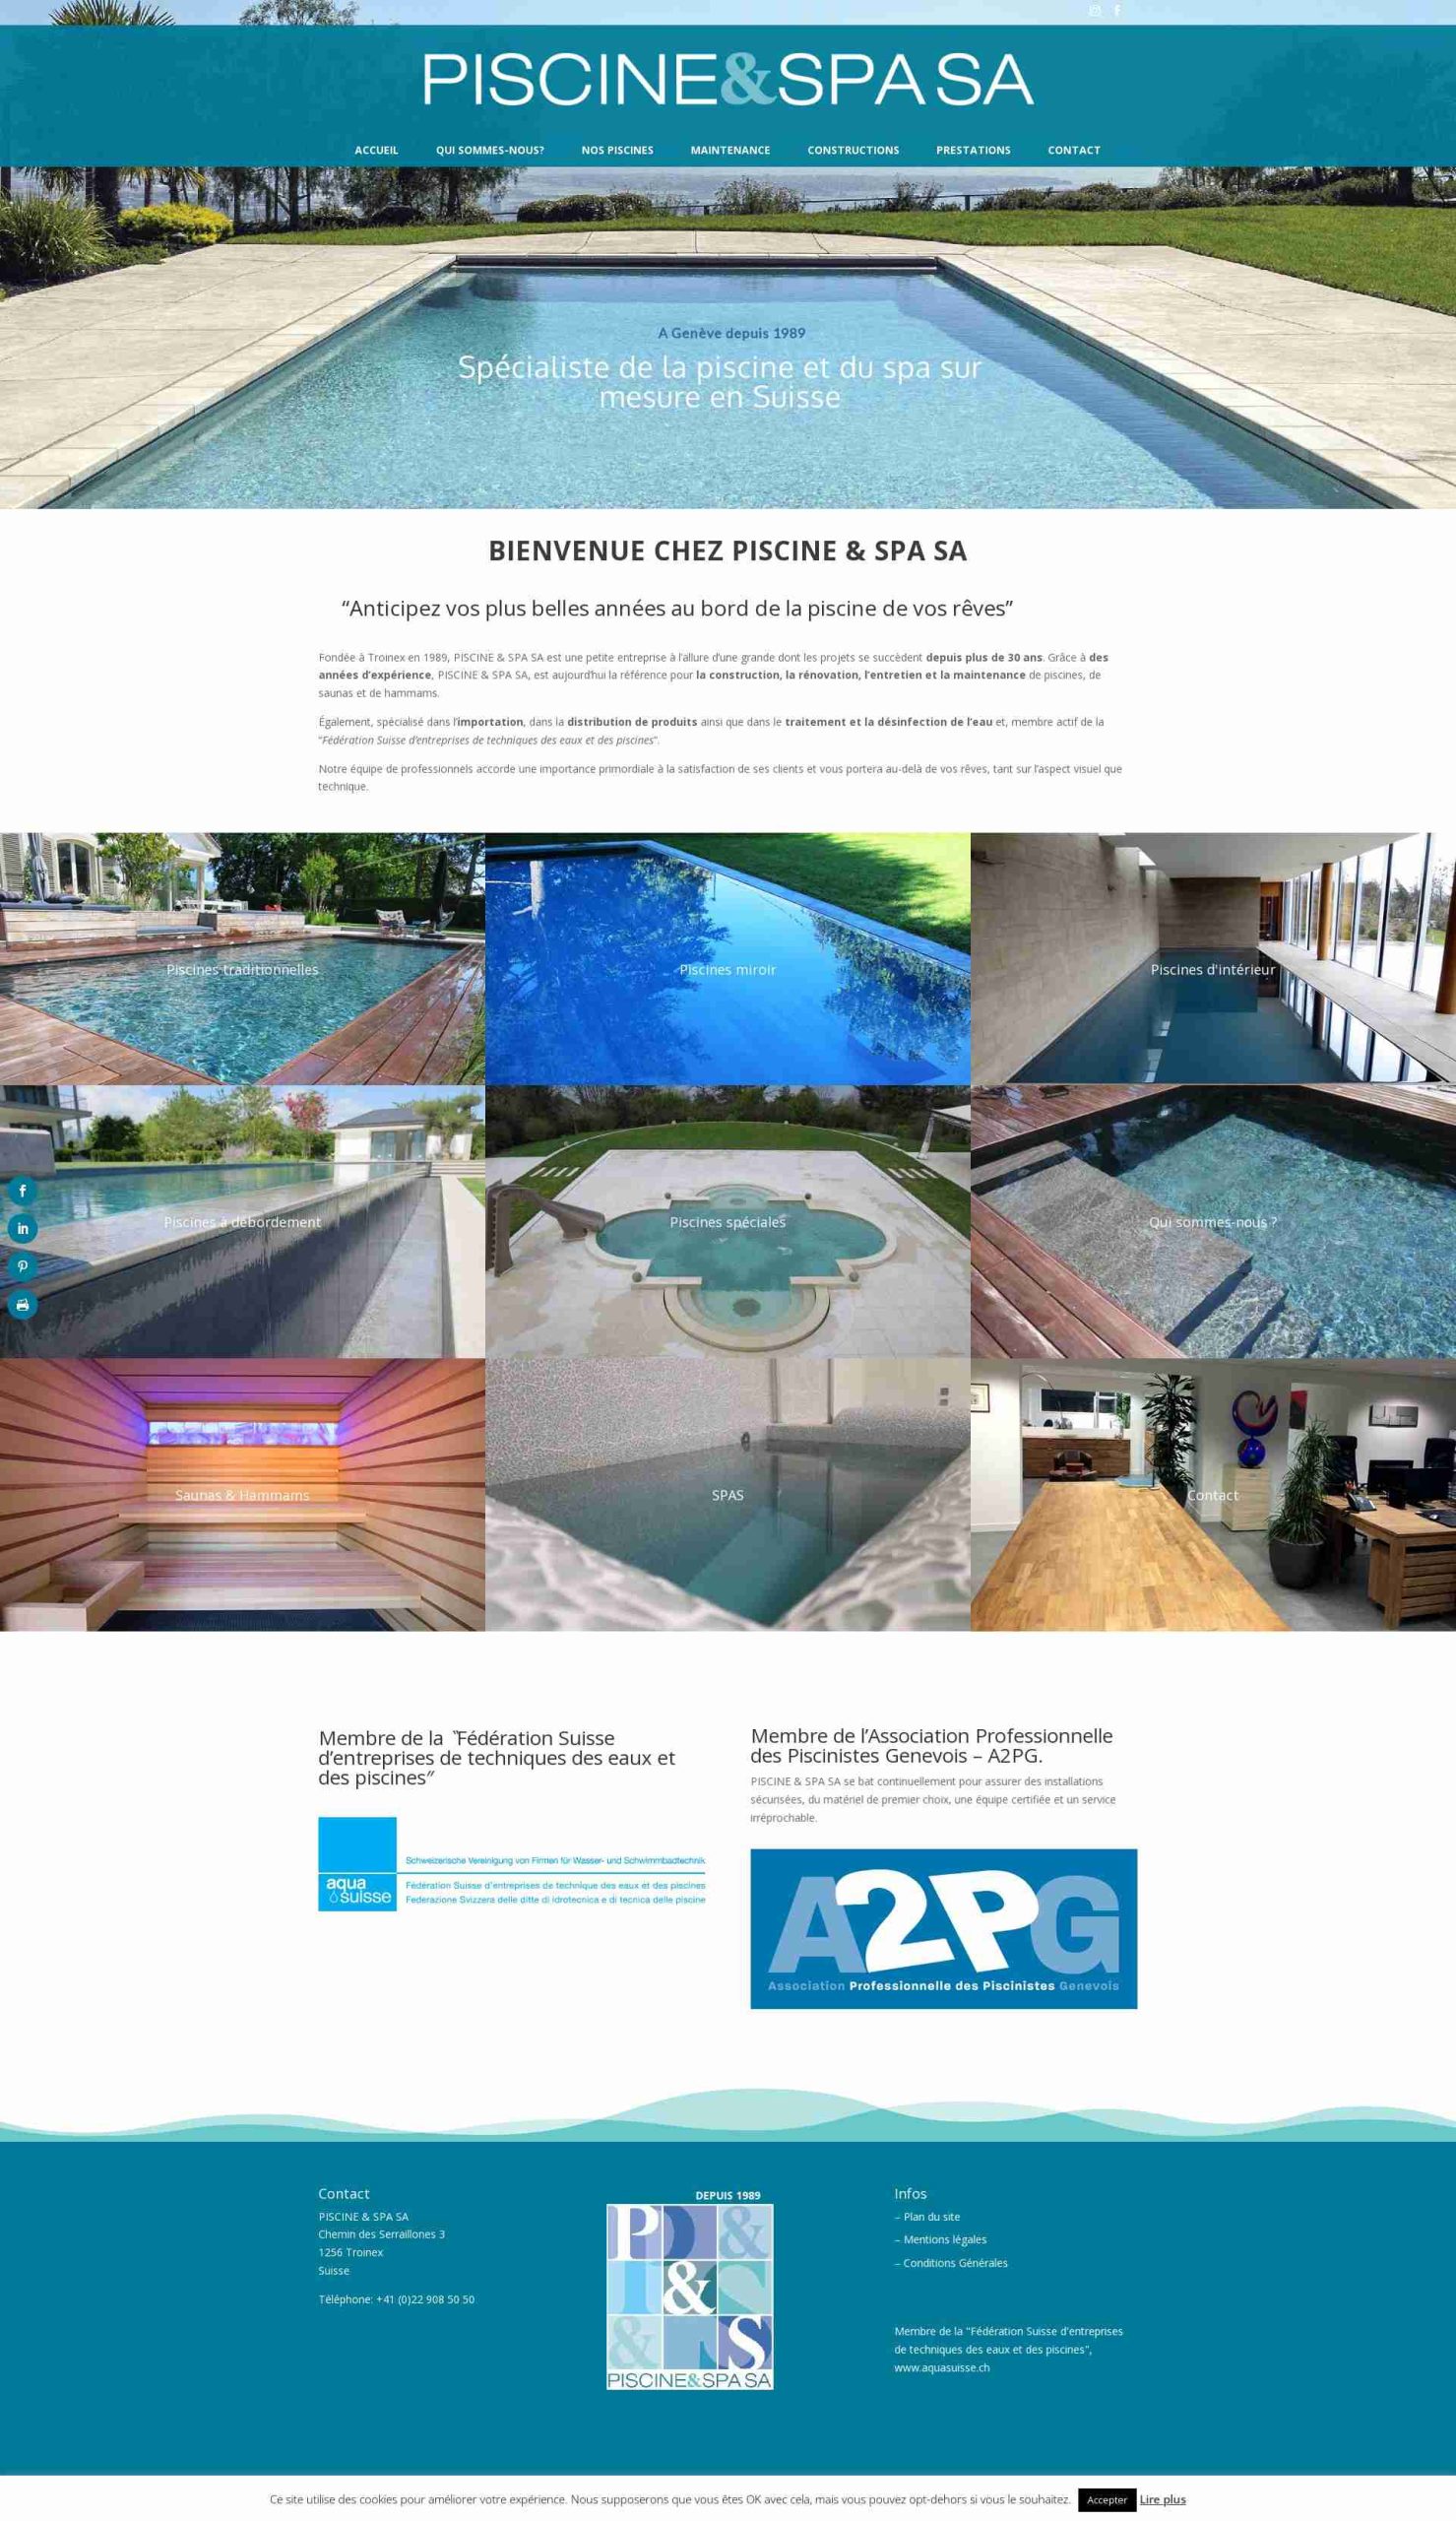 Piscine & Spa: construction de piscines, spas, saunas et hammams